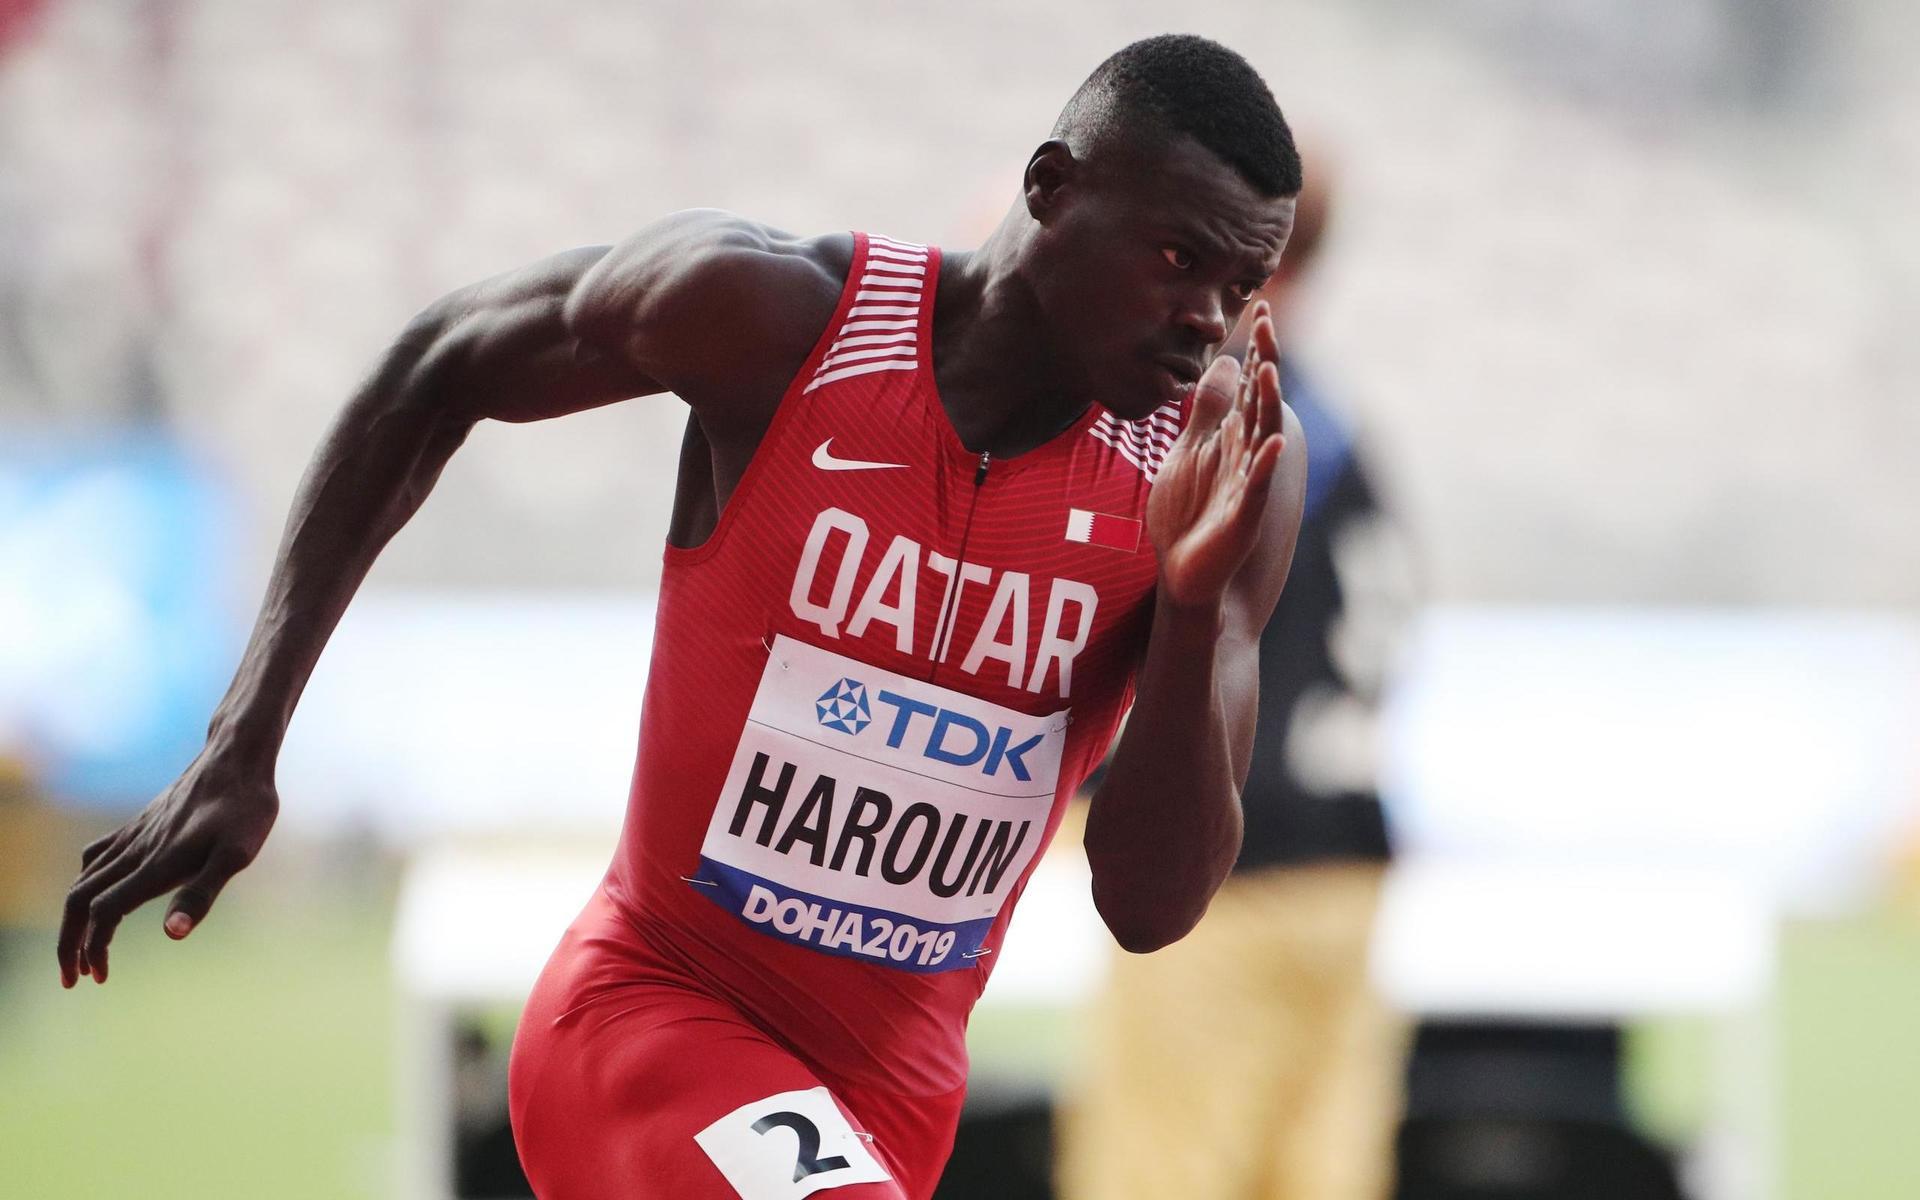 Haroun Hassan deltog vid VM i Doha 2019.